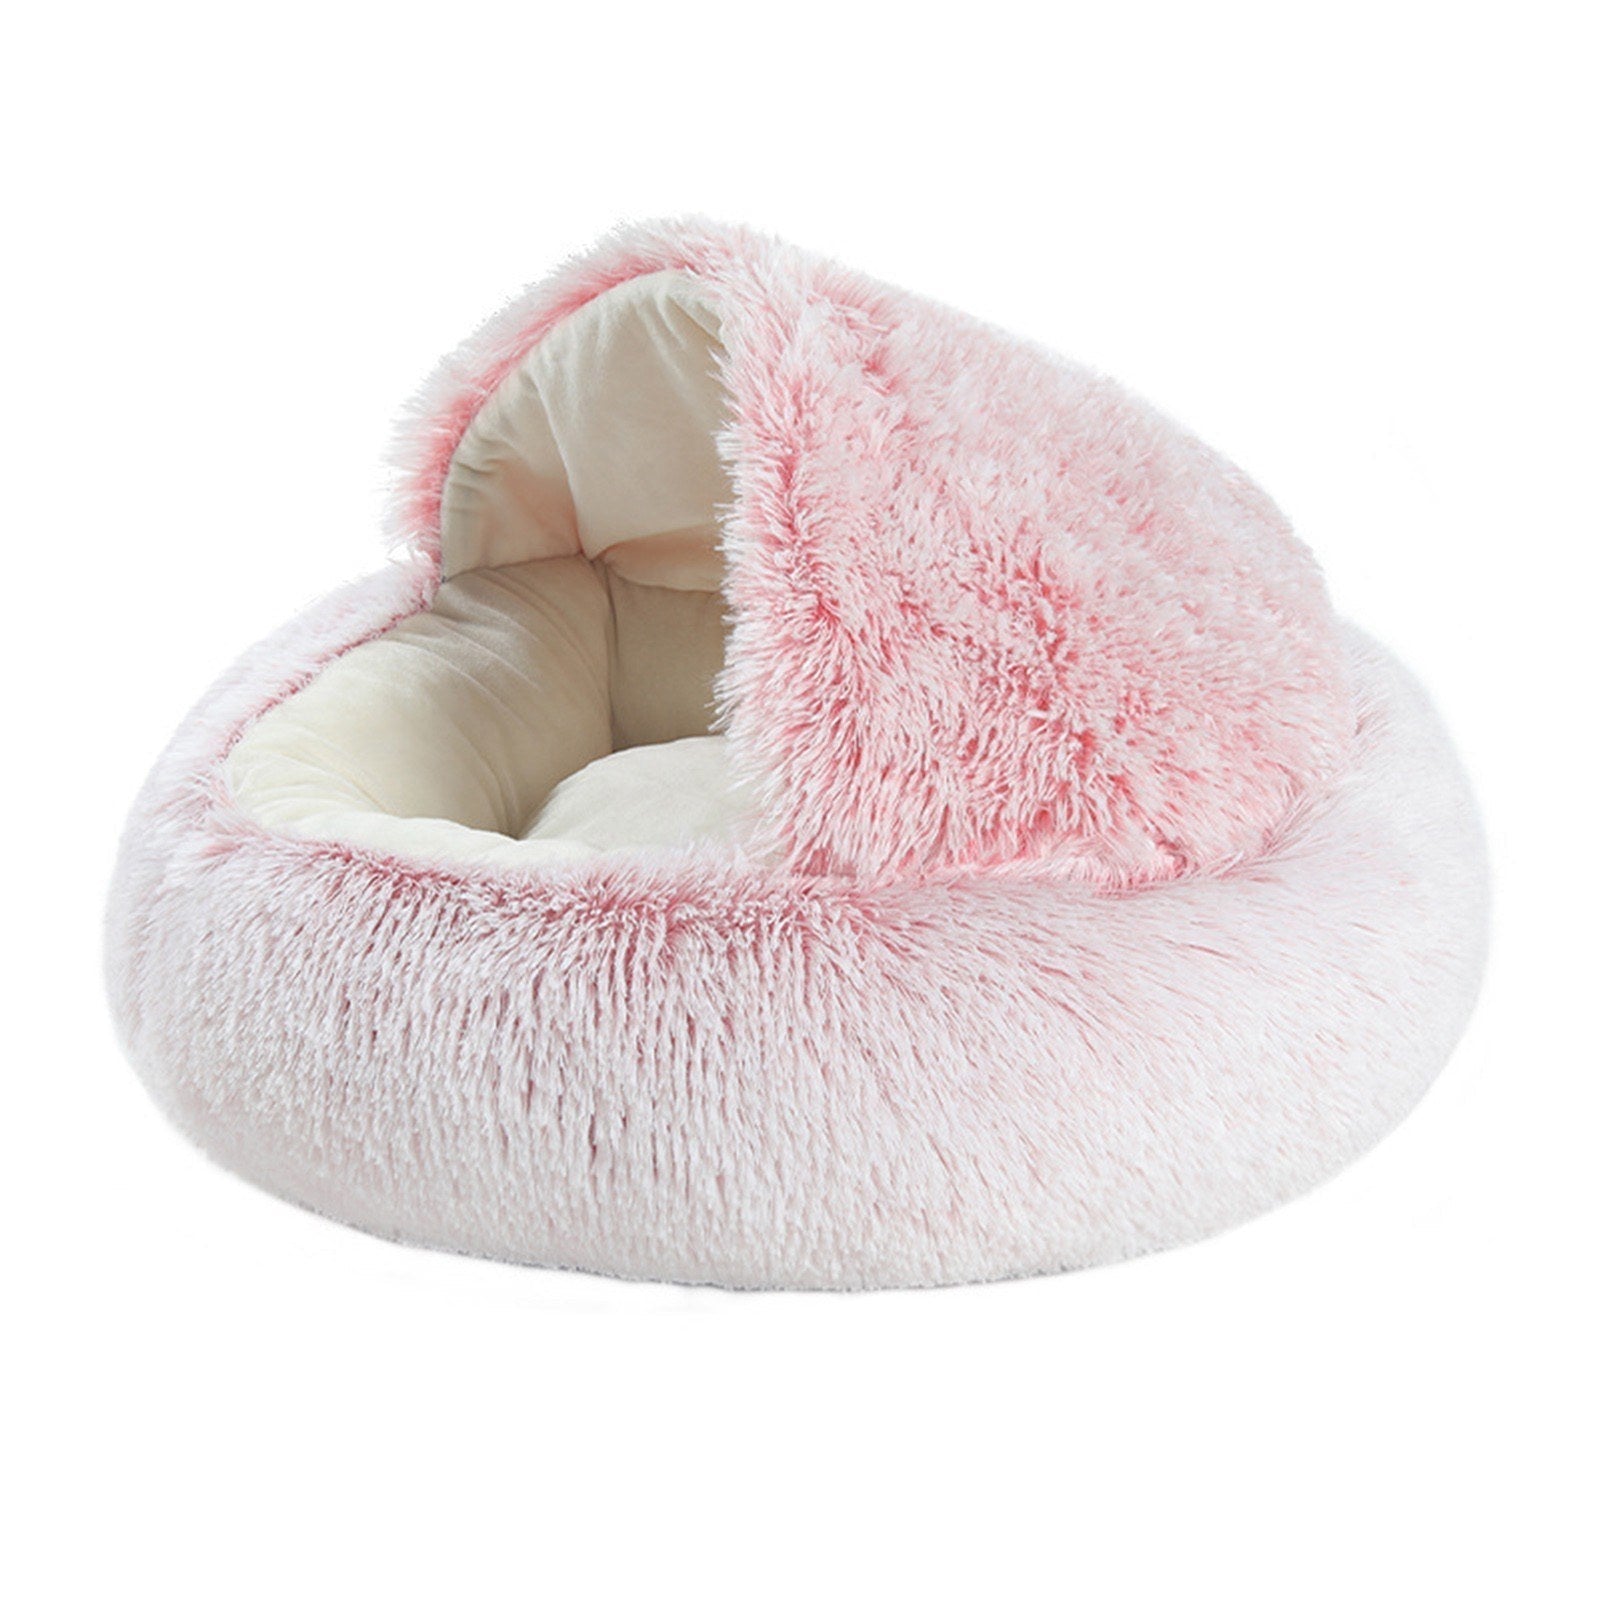 2-in-1 Round Plush Pet Cat Dog Sofa BedWinter Warm Pet Cat Small Dog Sleeping Nest Cute Fluffy Soft Nest Non Slip Bottom Bed